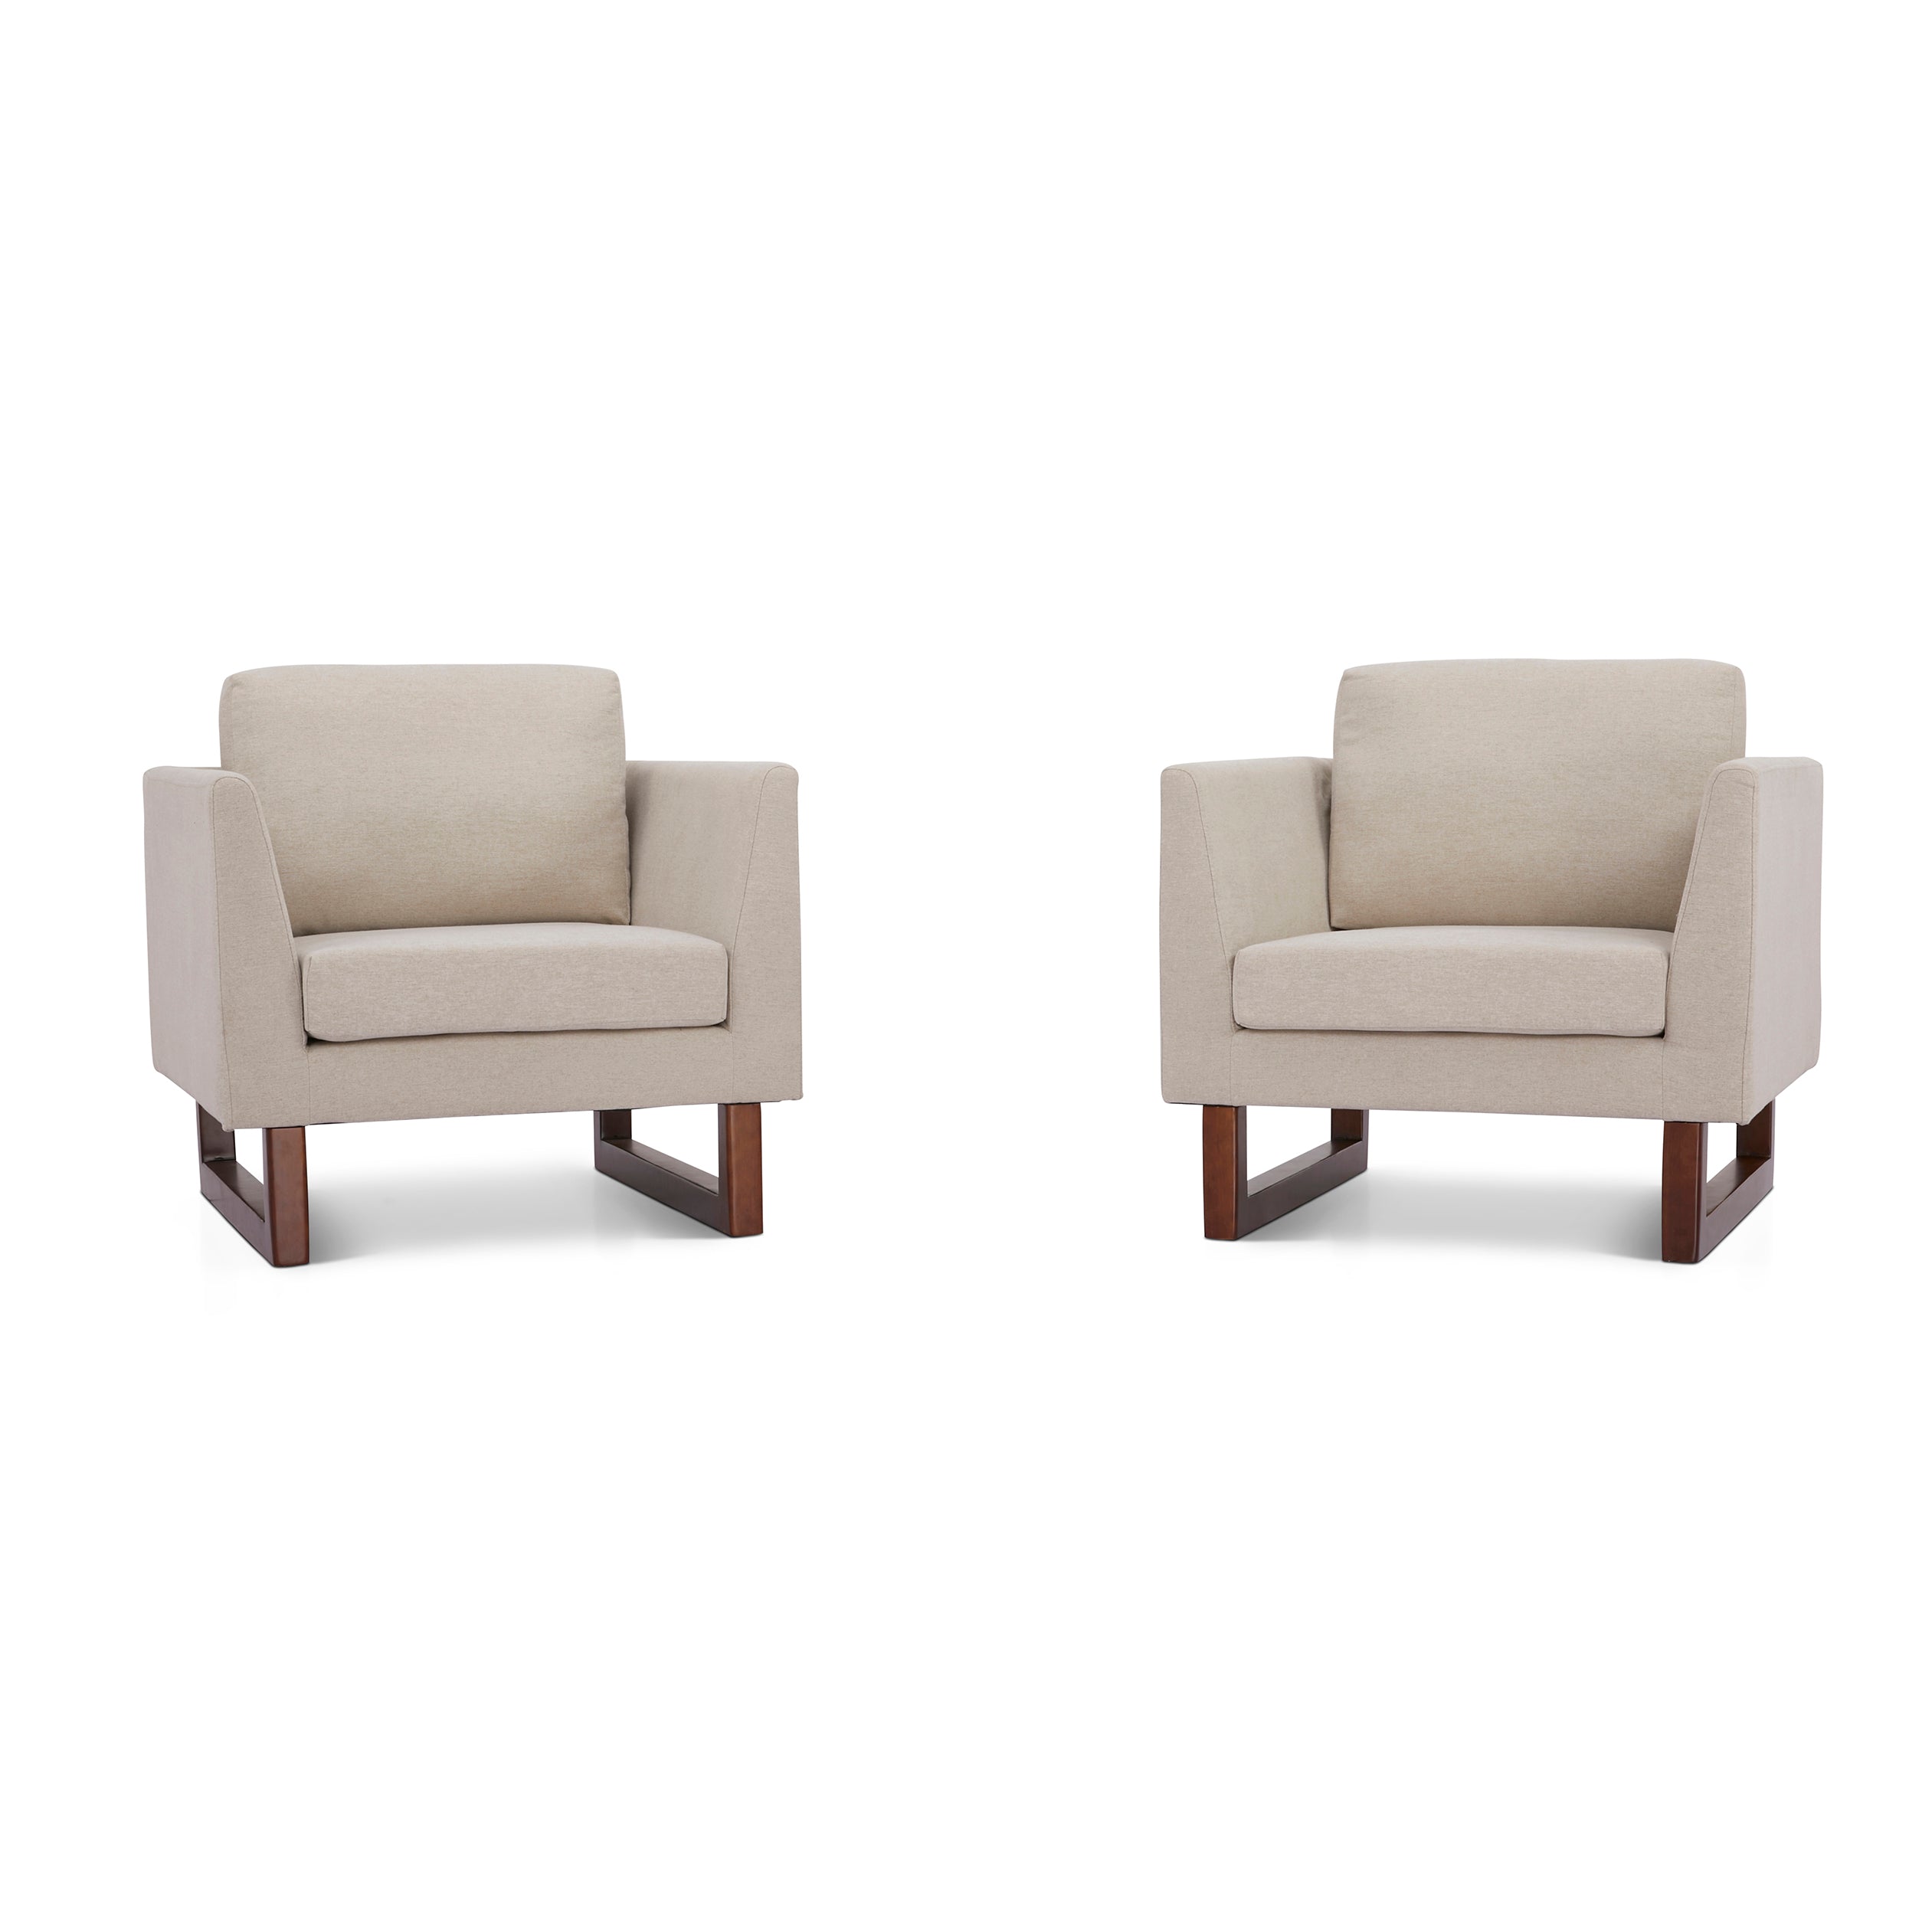 Hayden Accent Chair - Set of 2